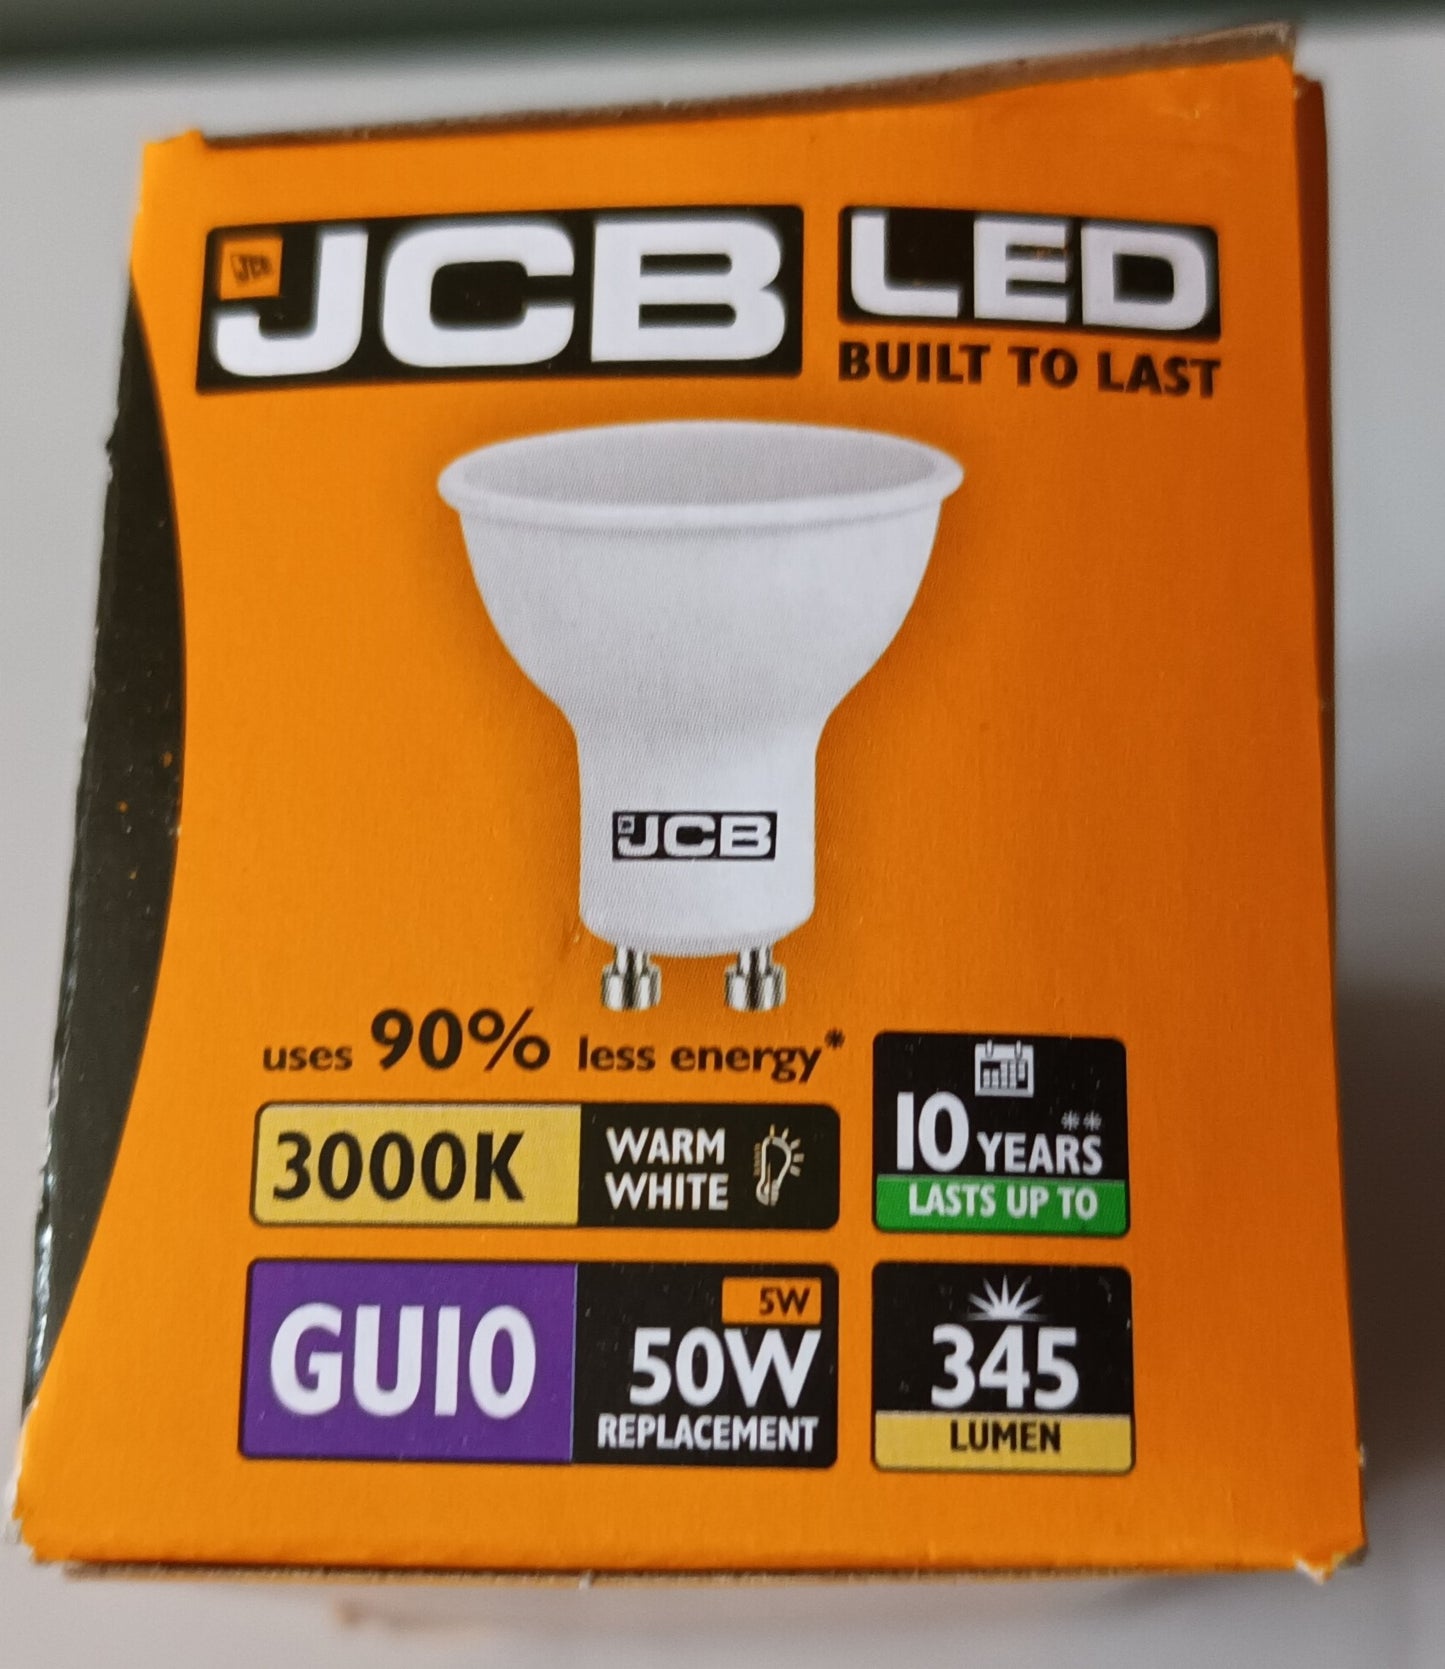 4 Pack Of Gu10 LED By Jcb Warm White 3000K 5W